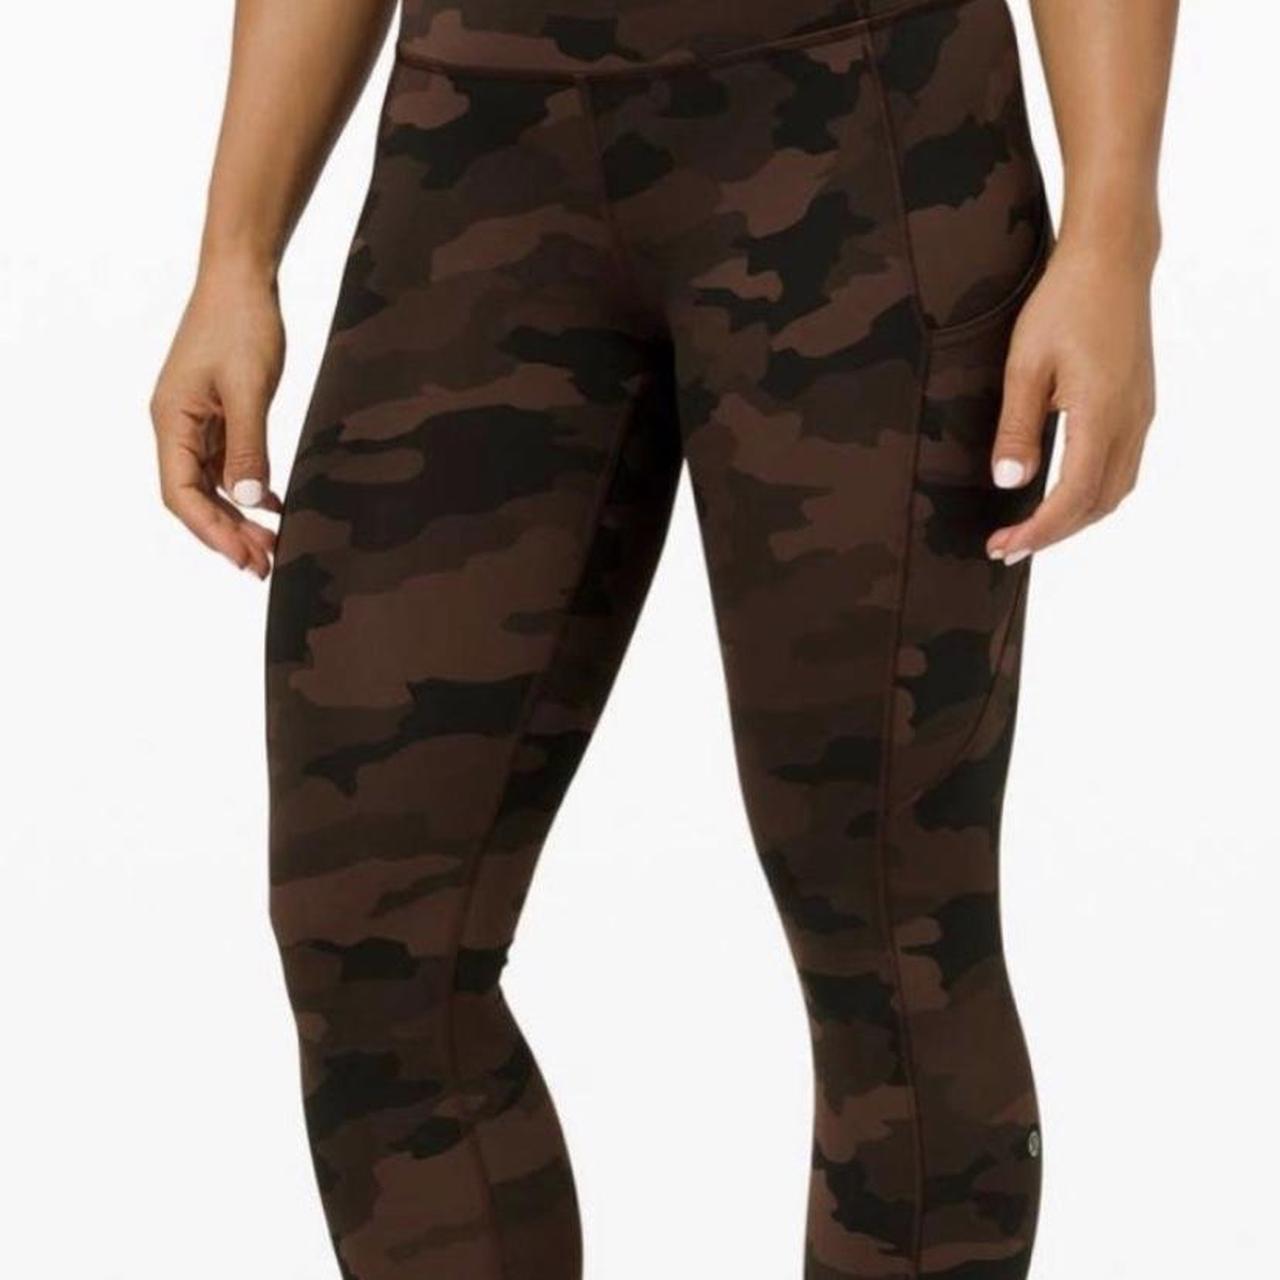 brown camo lululemon leggings size 2 #leggings - Depop